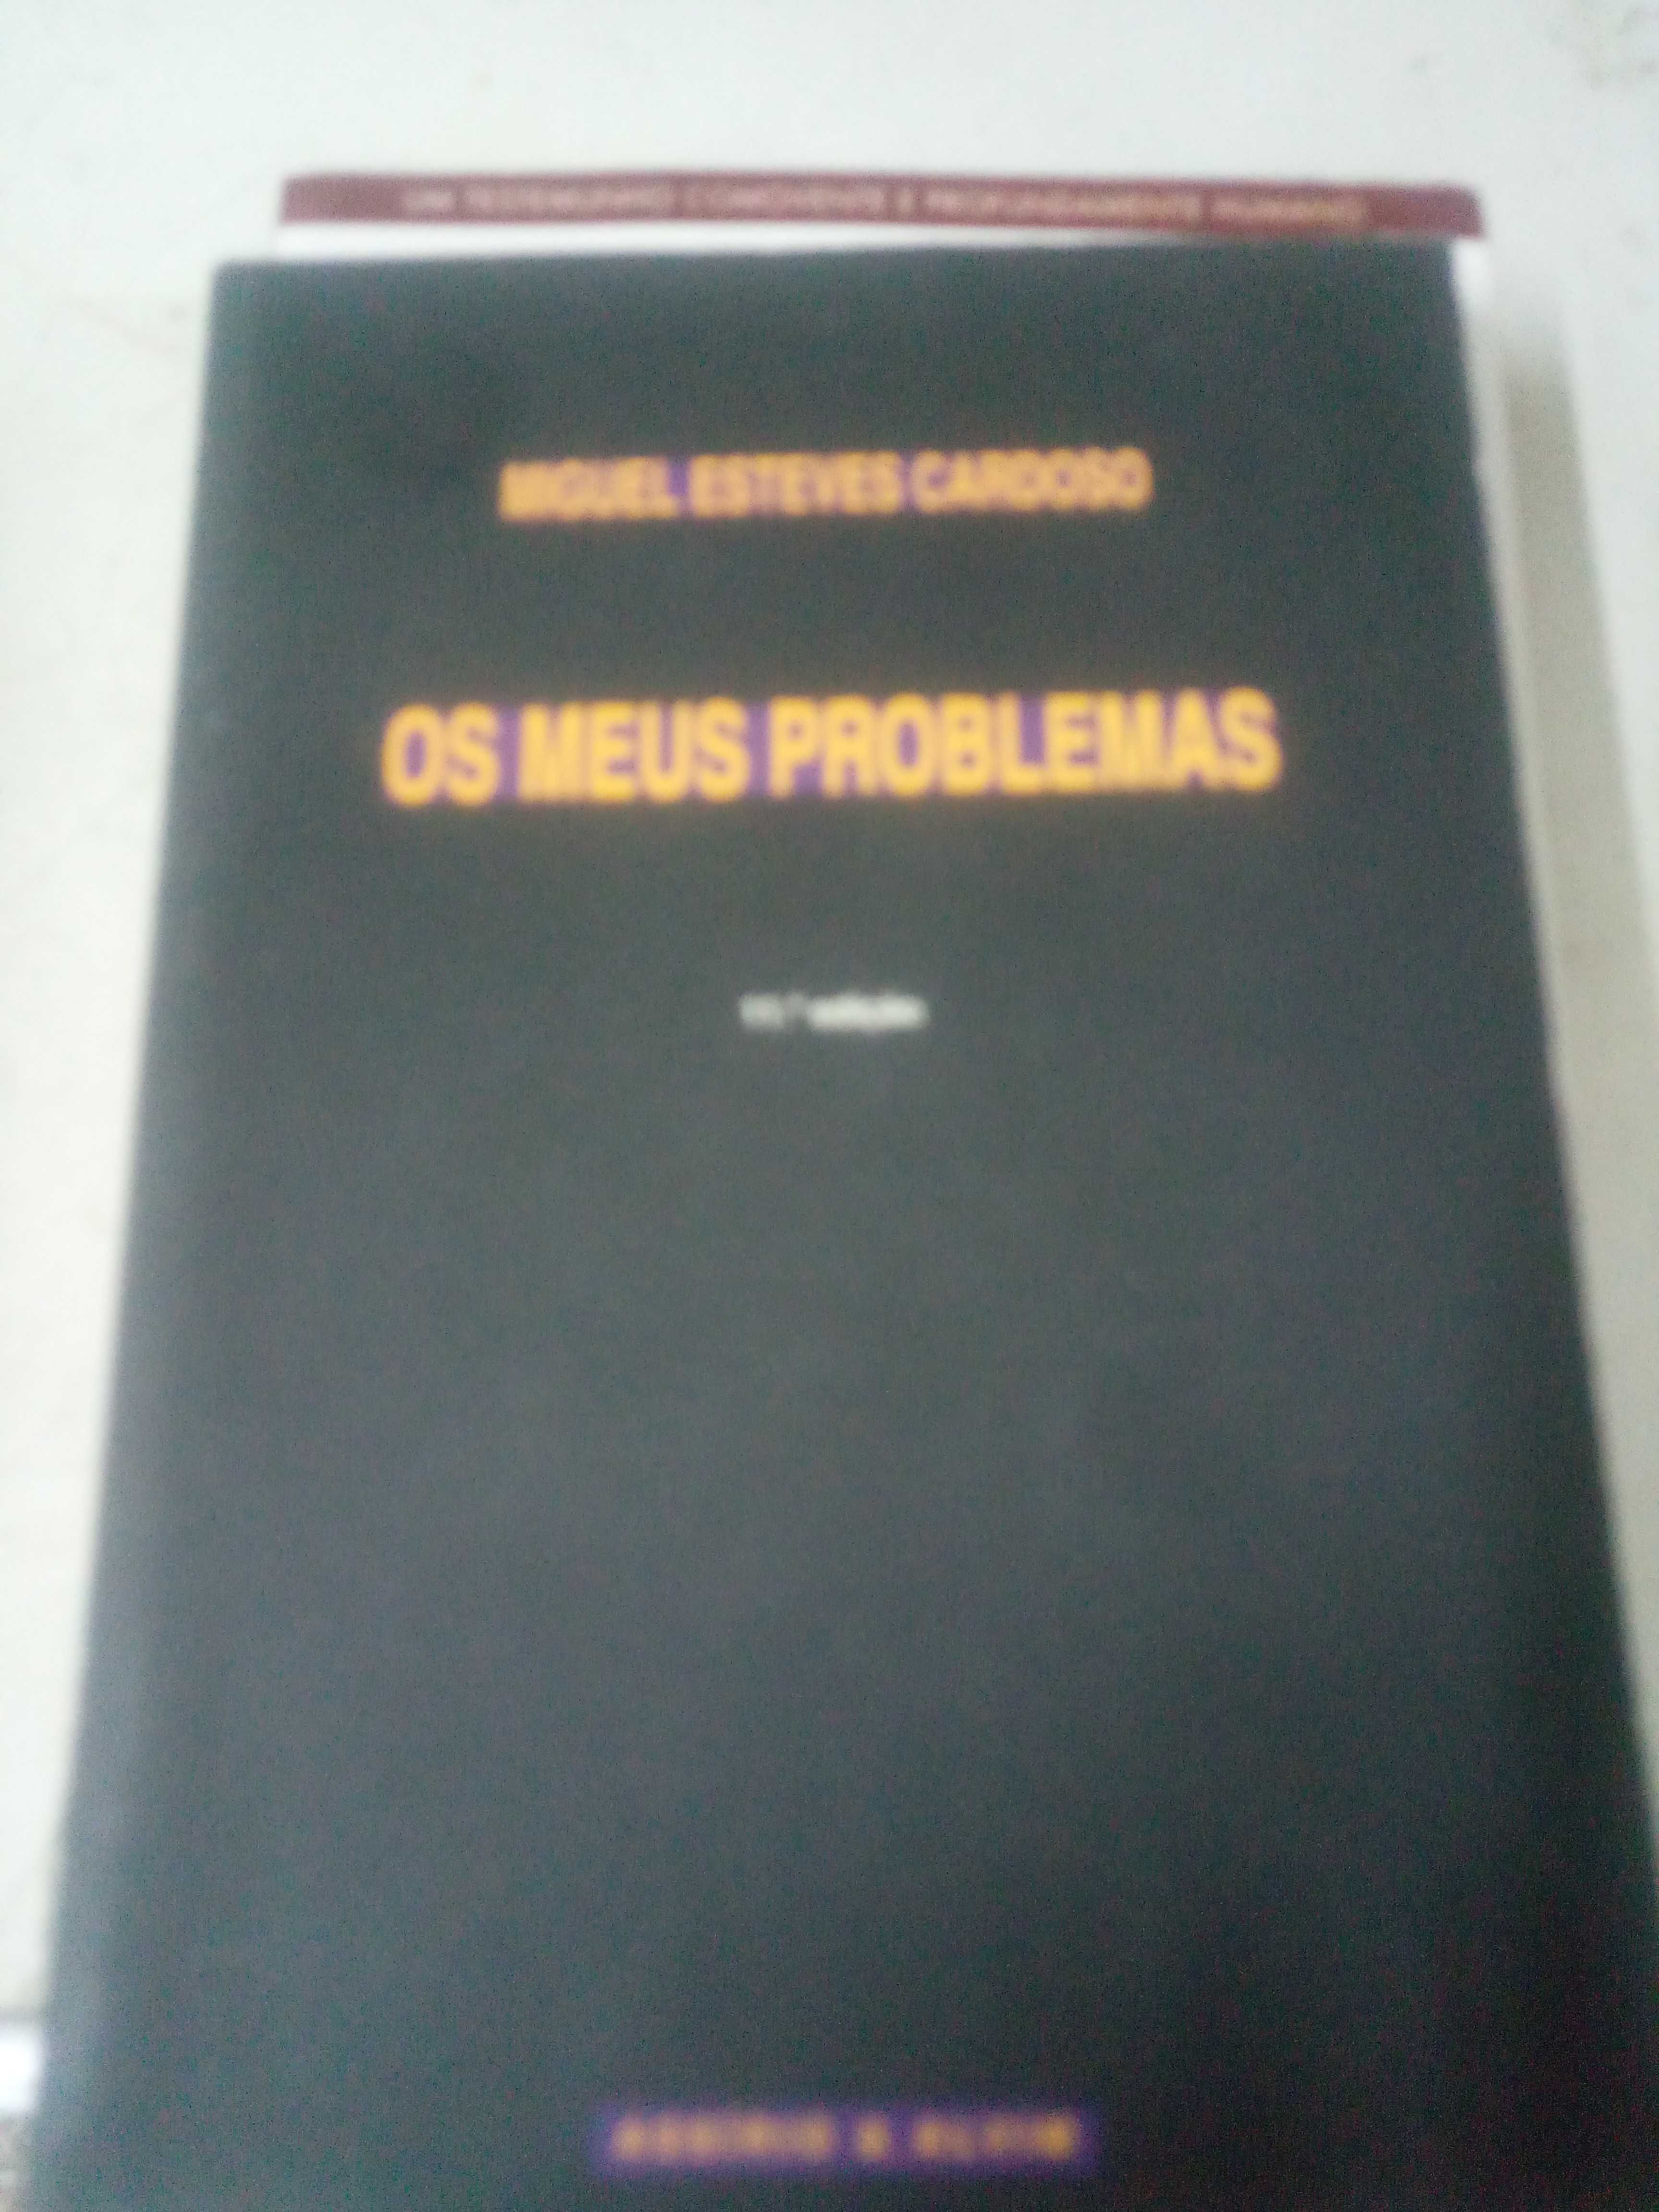 Os meus problemas, Miguel Esteves Cardoso